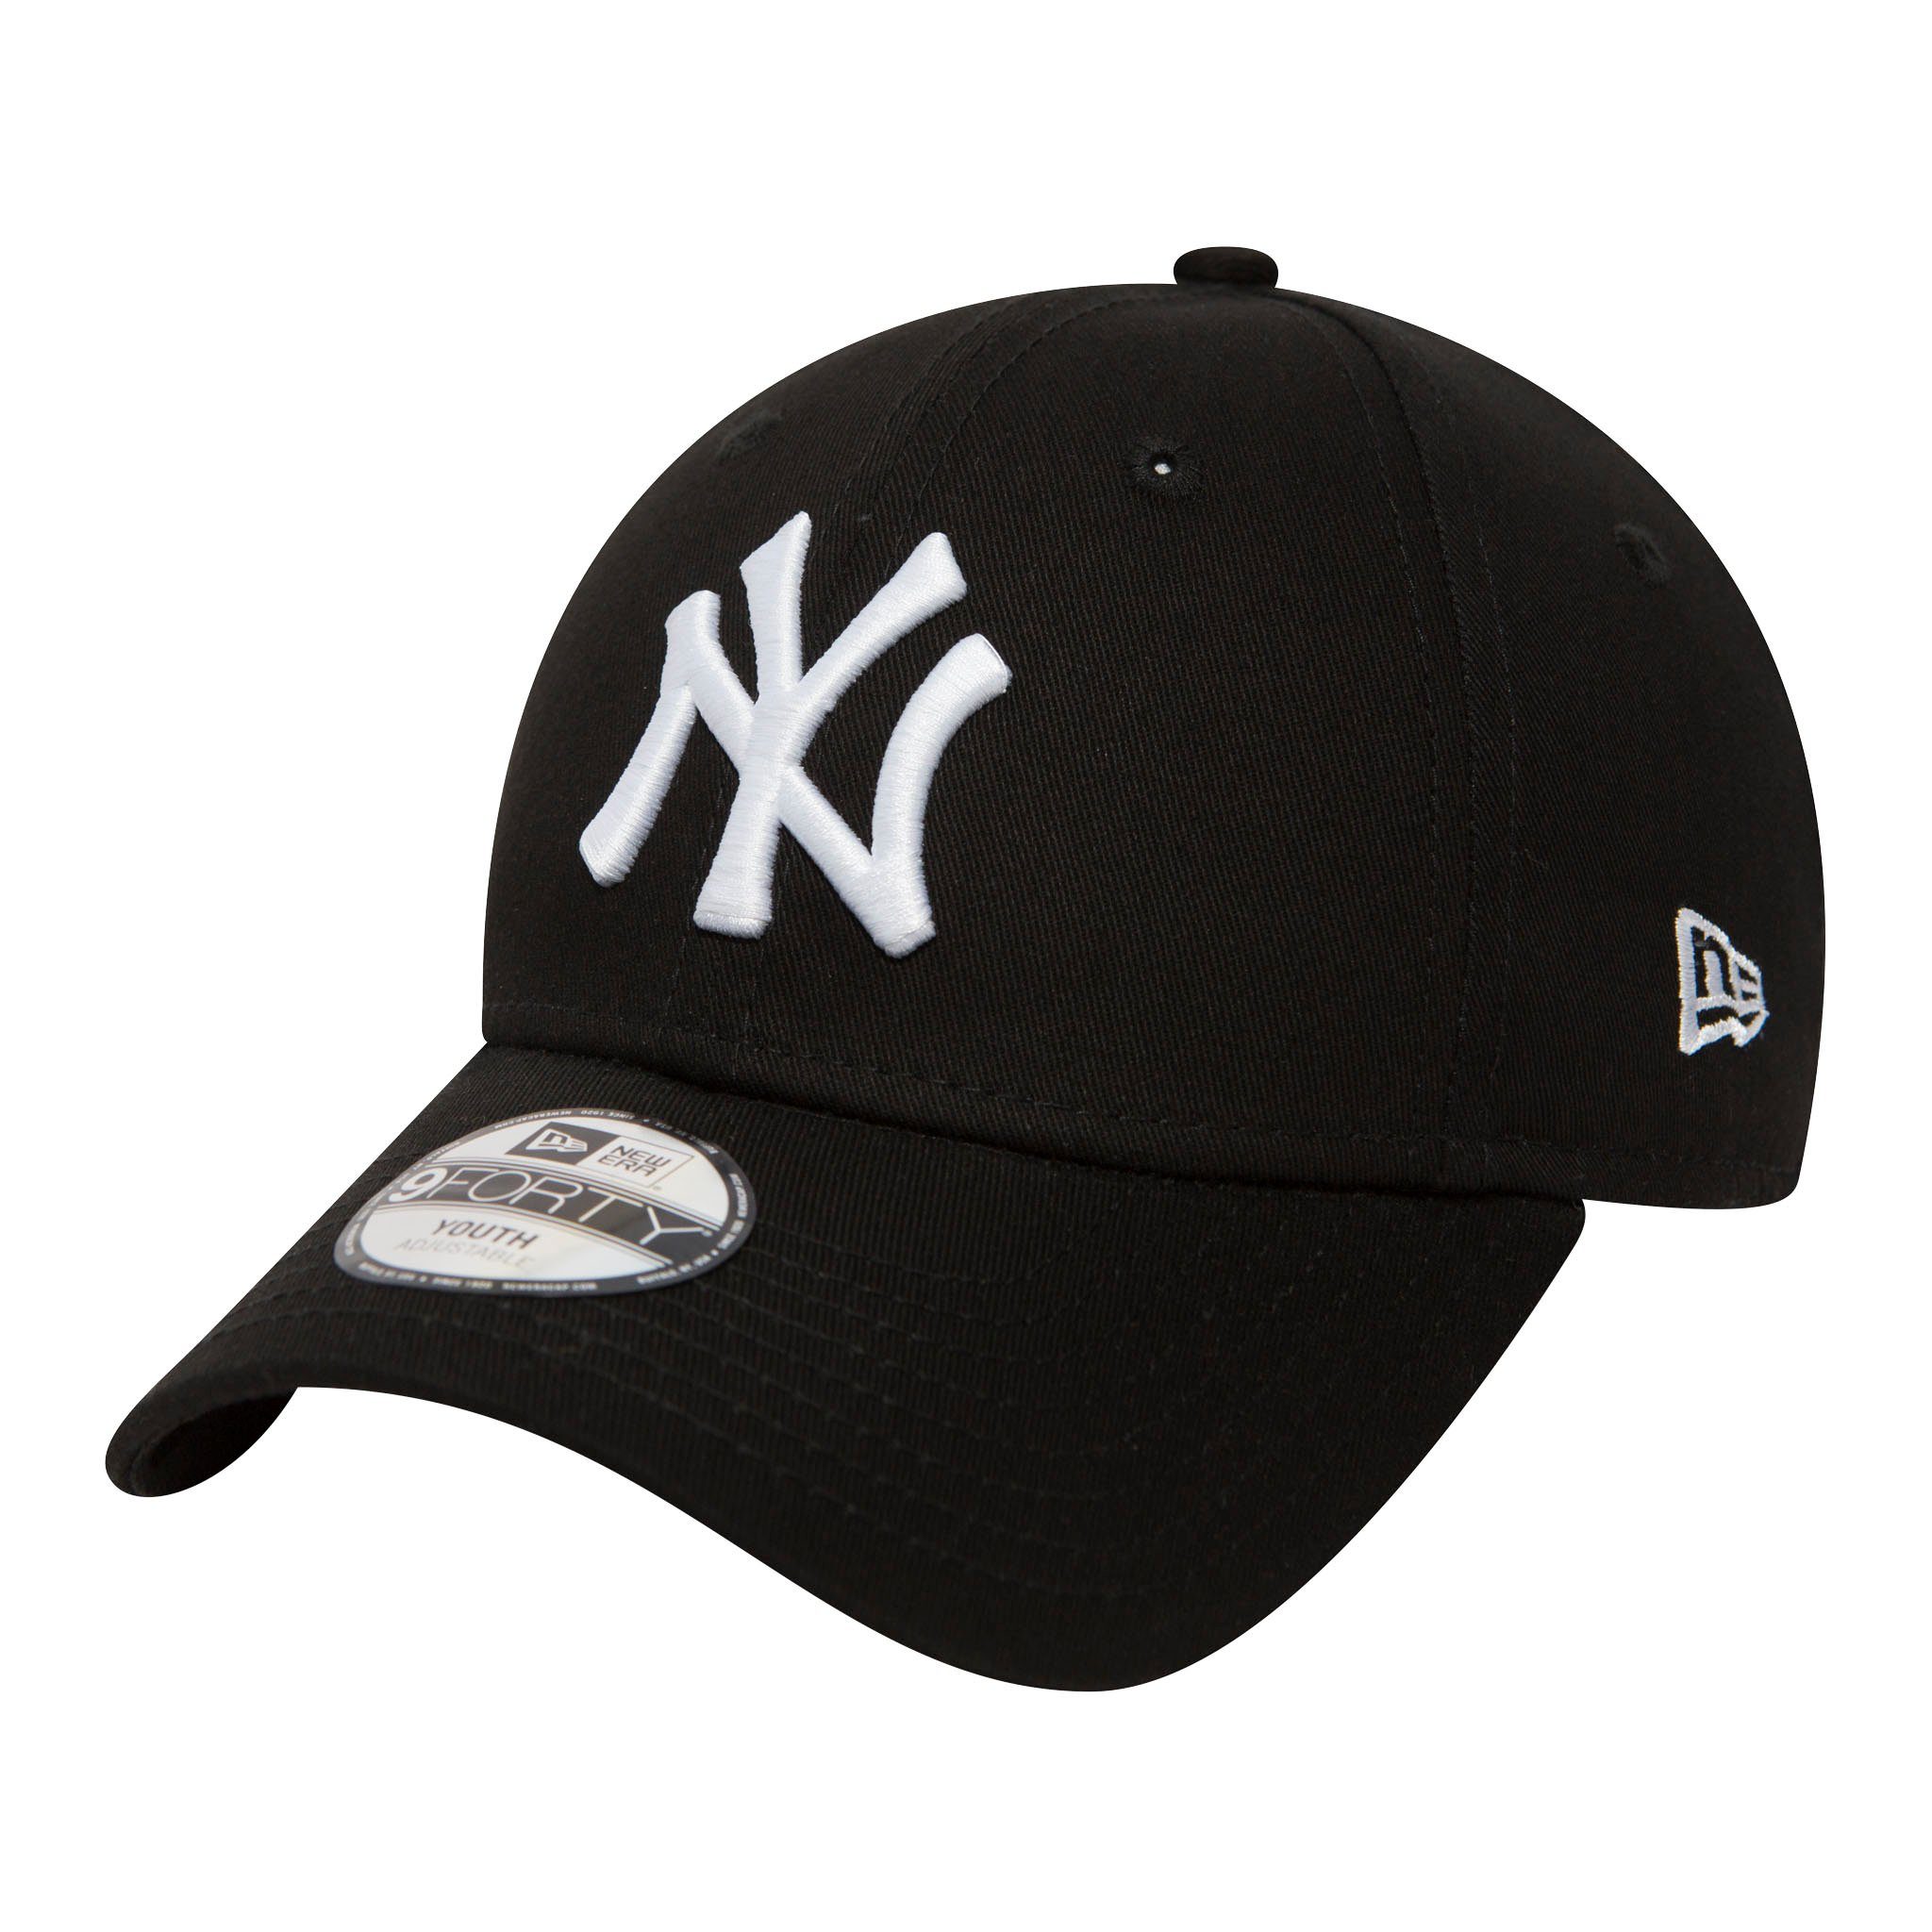 Echte Qualität New Era Baseball Cap YORK YANKEES N schwarz NEW